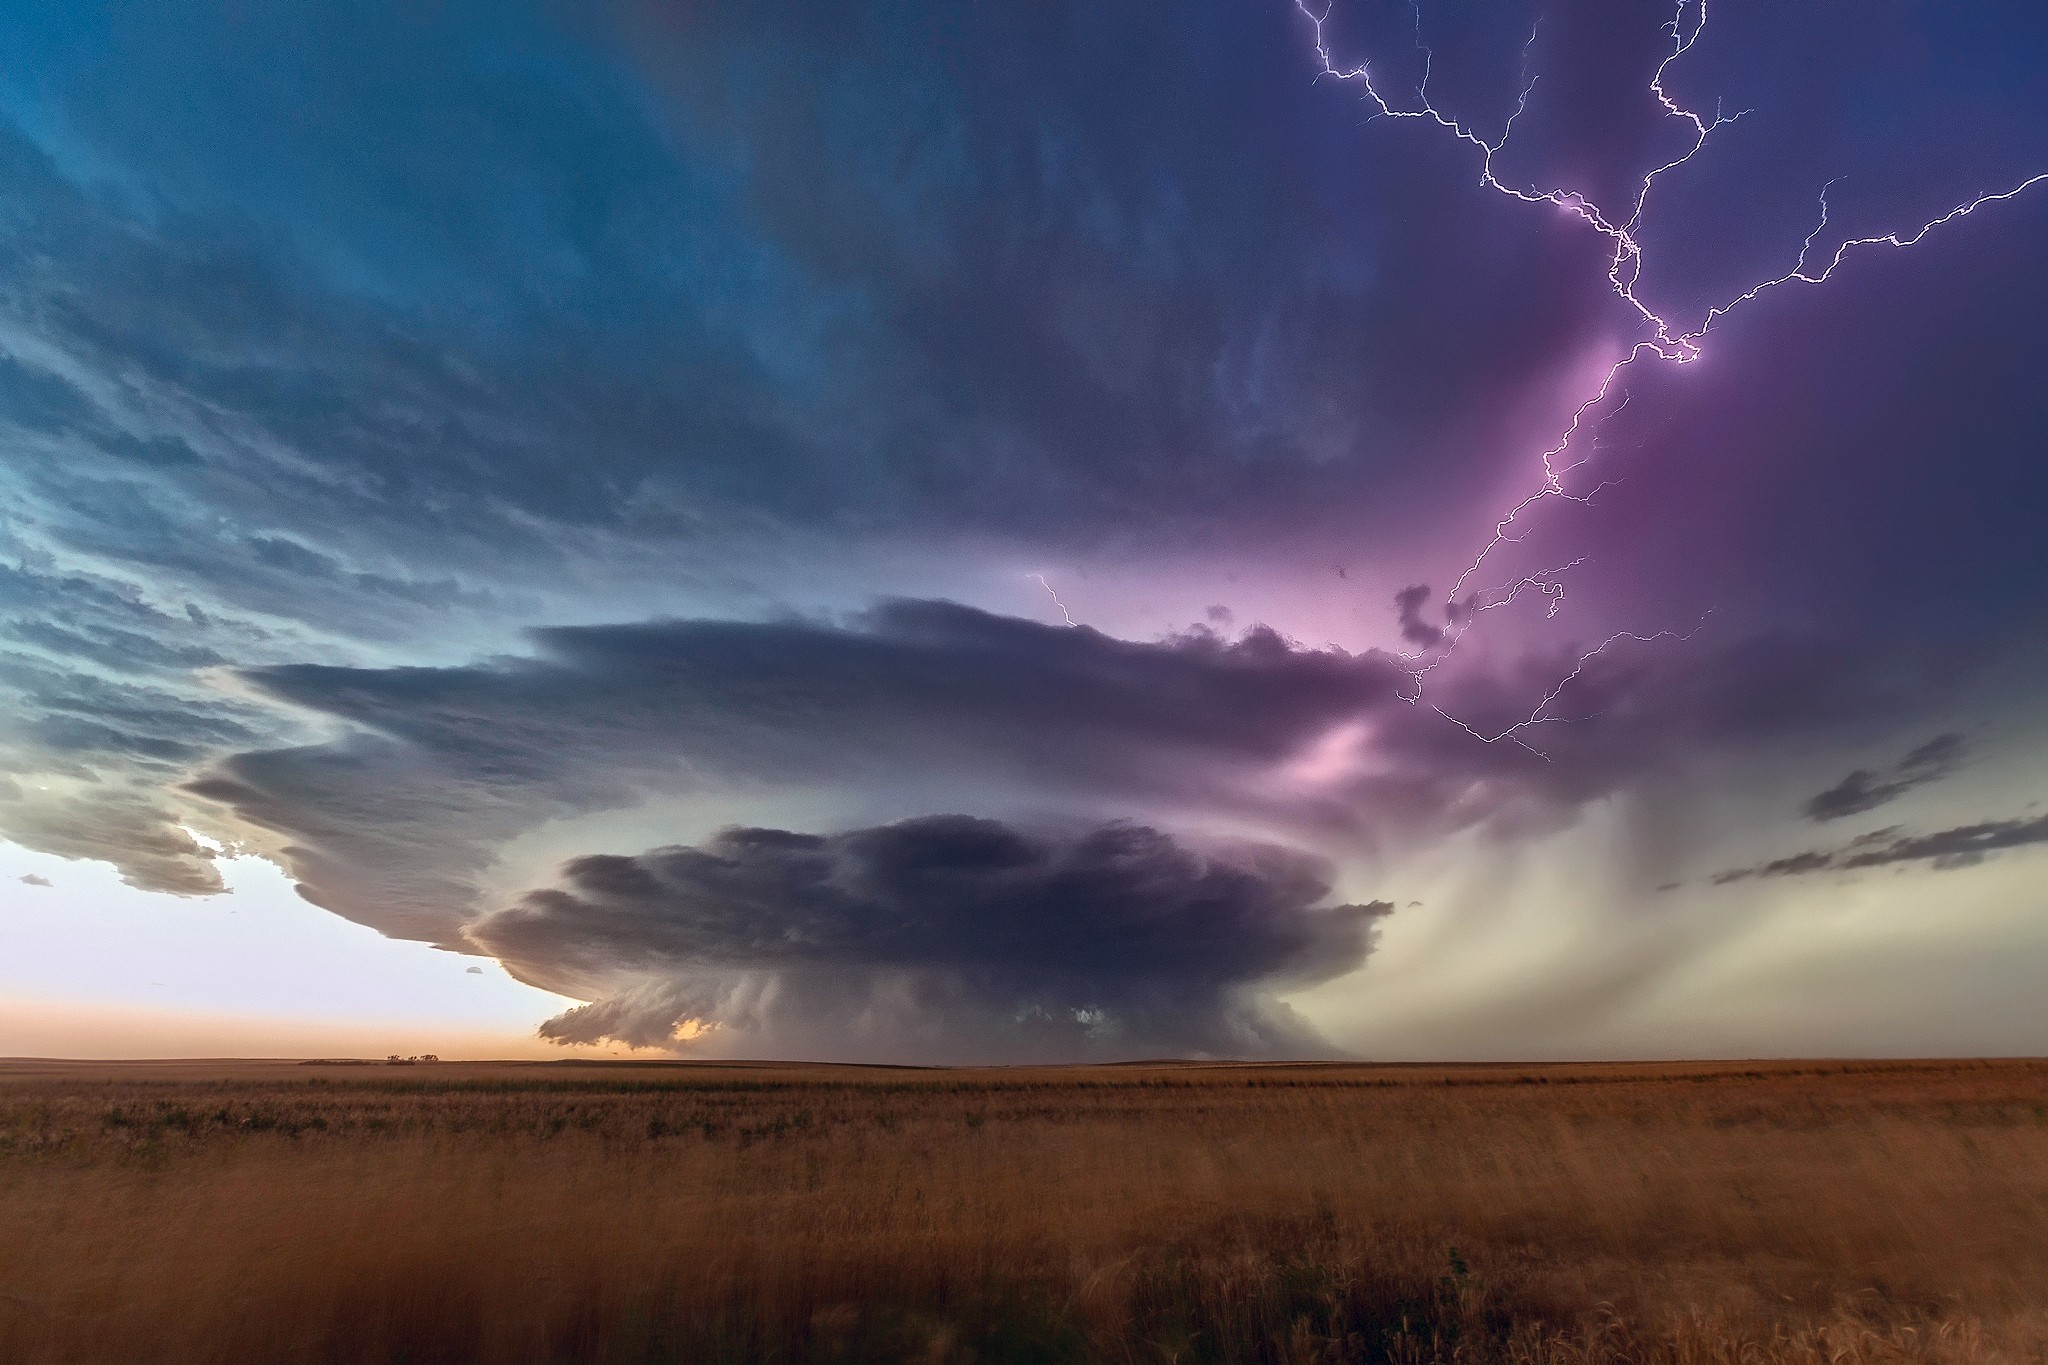 General 2048x1365 nature landscape storm plains lightning clouds overcast South Dakota sky field